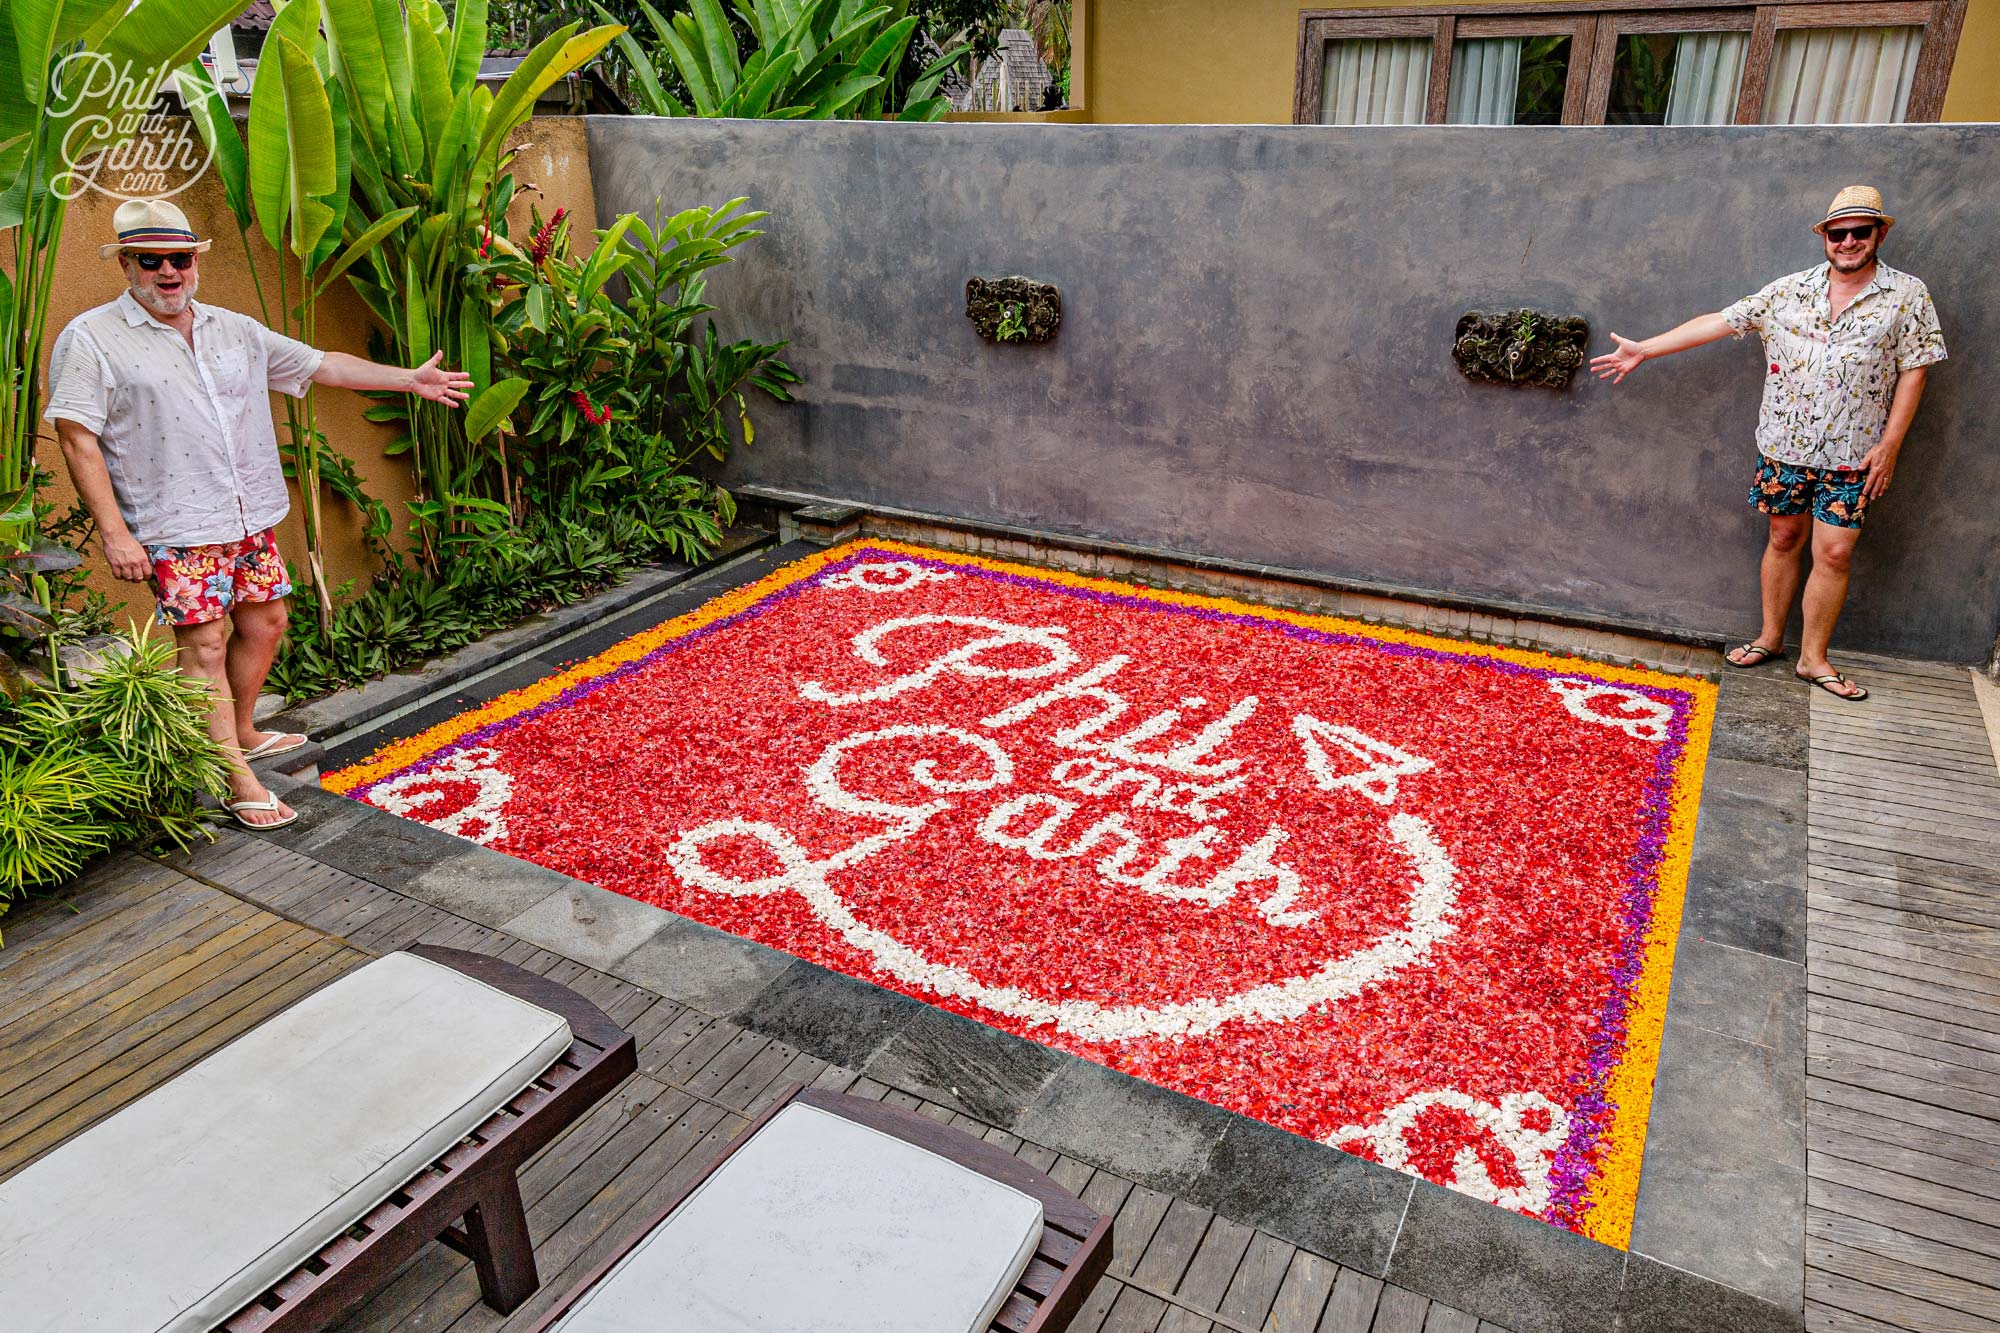 We chose the Sankara Resort in Ubud for our flower pool in Bali